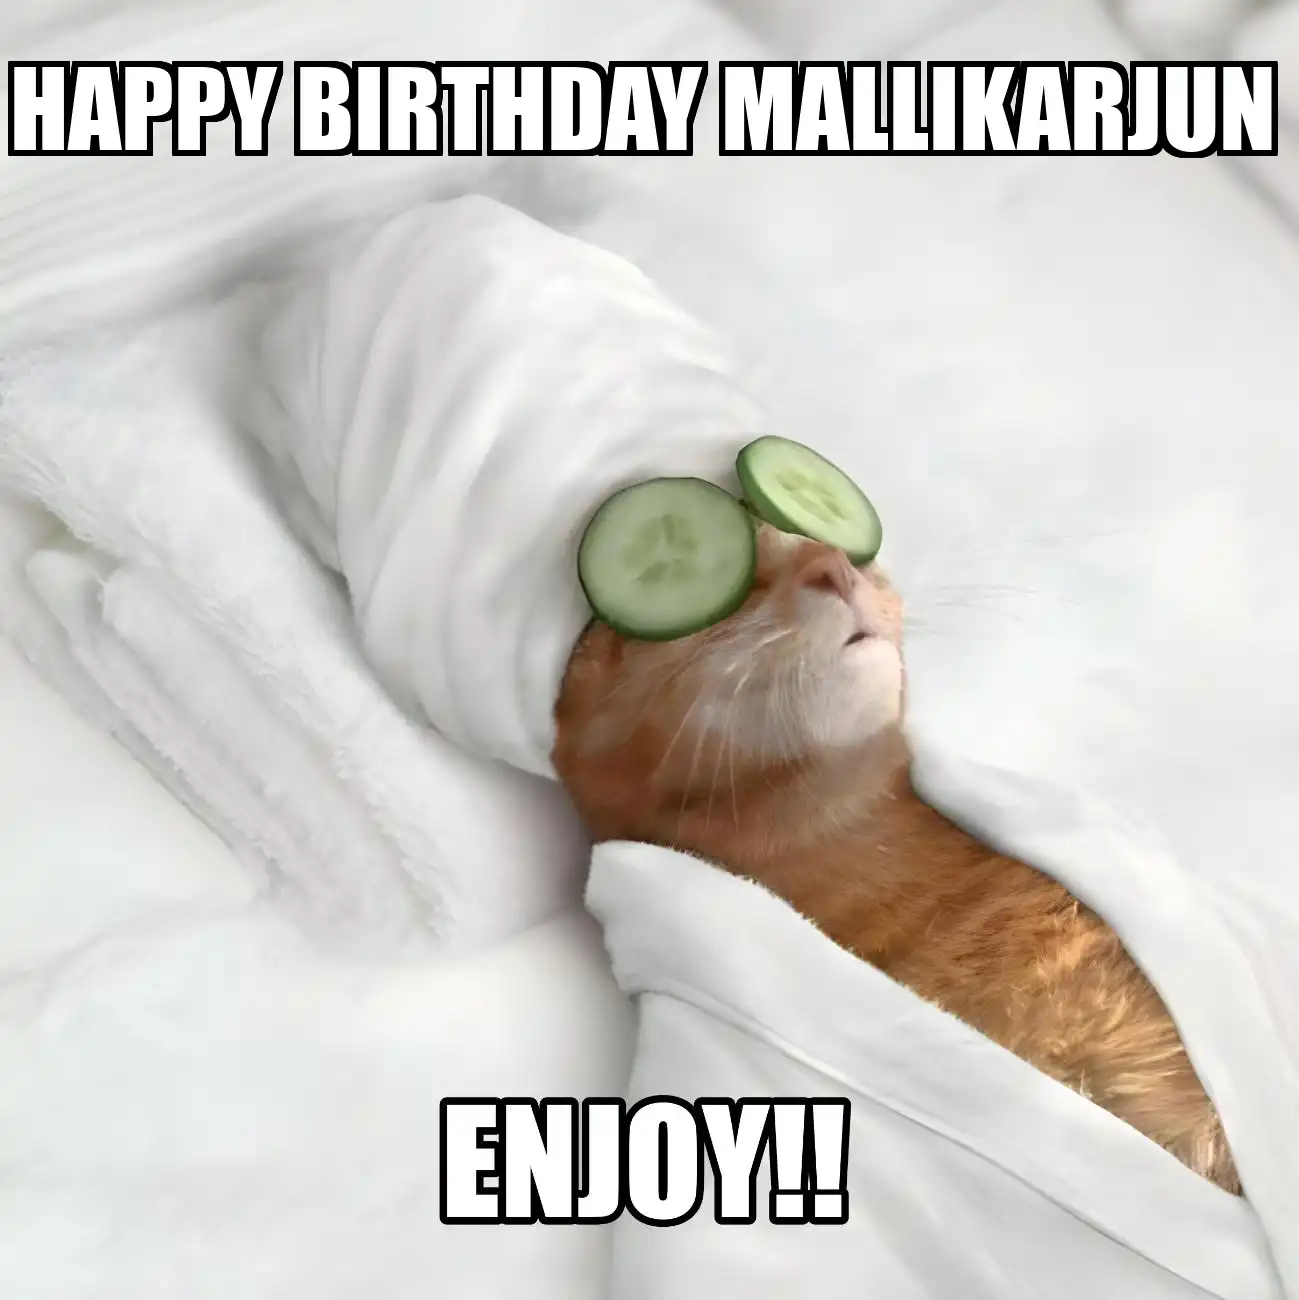 Happy Birthday Mallikarjun Enjoy Cat Meme